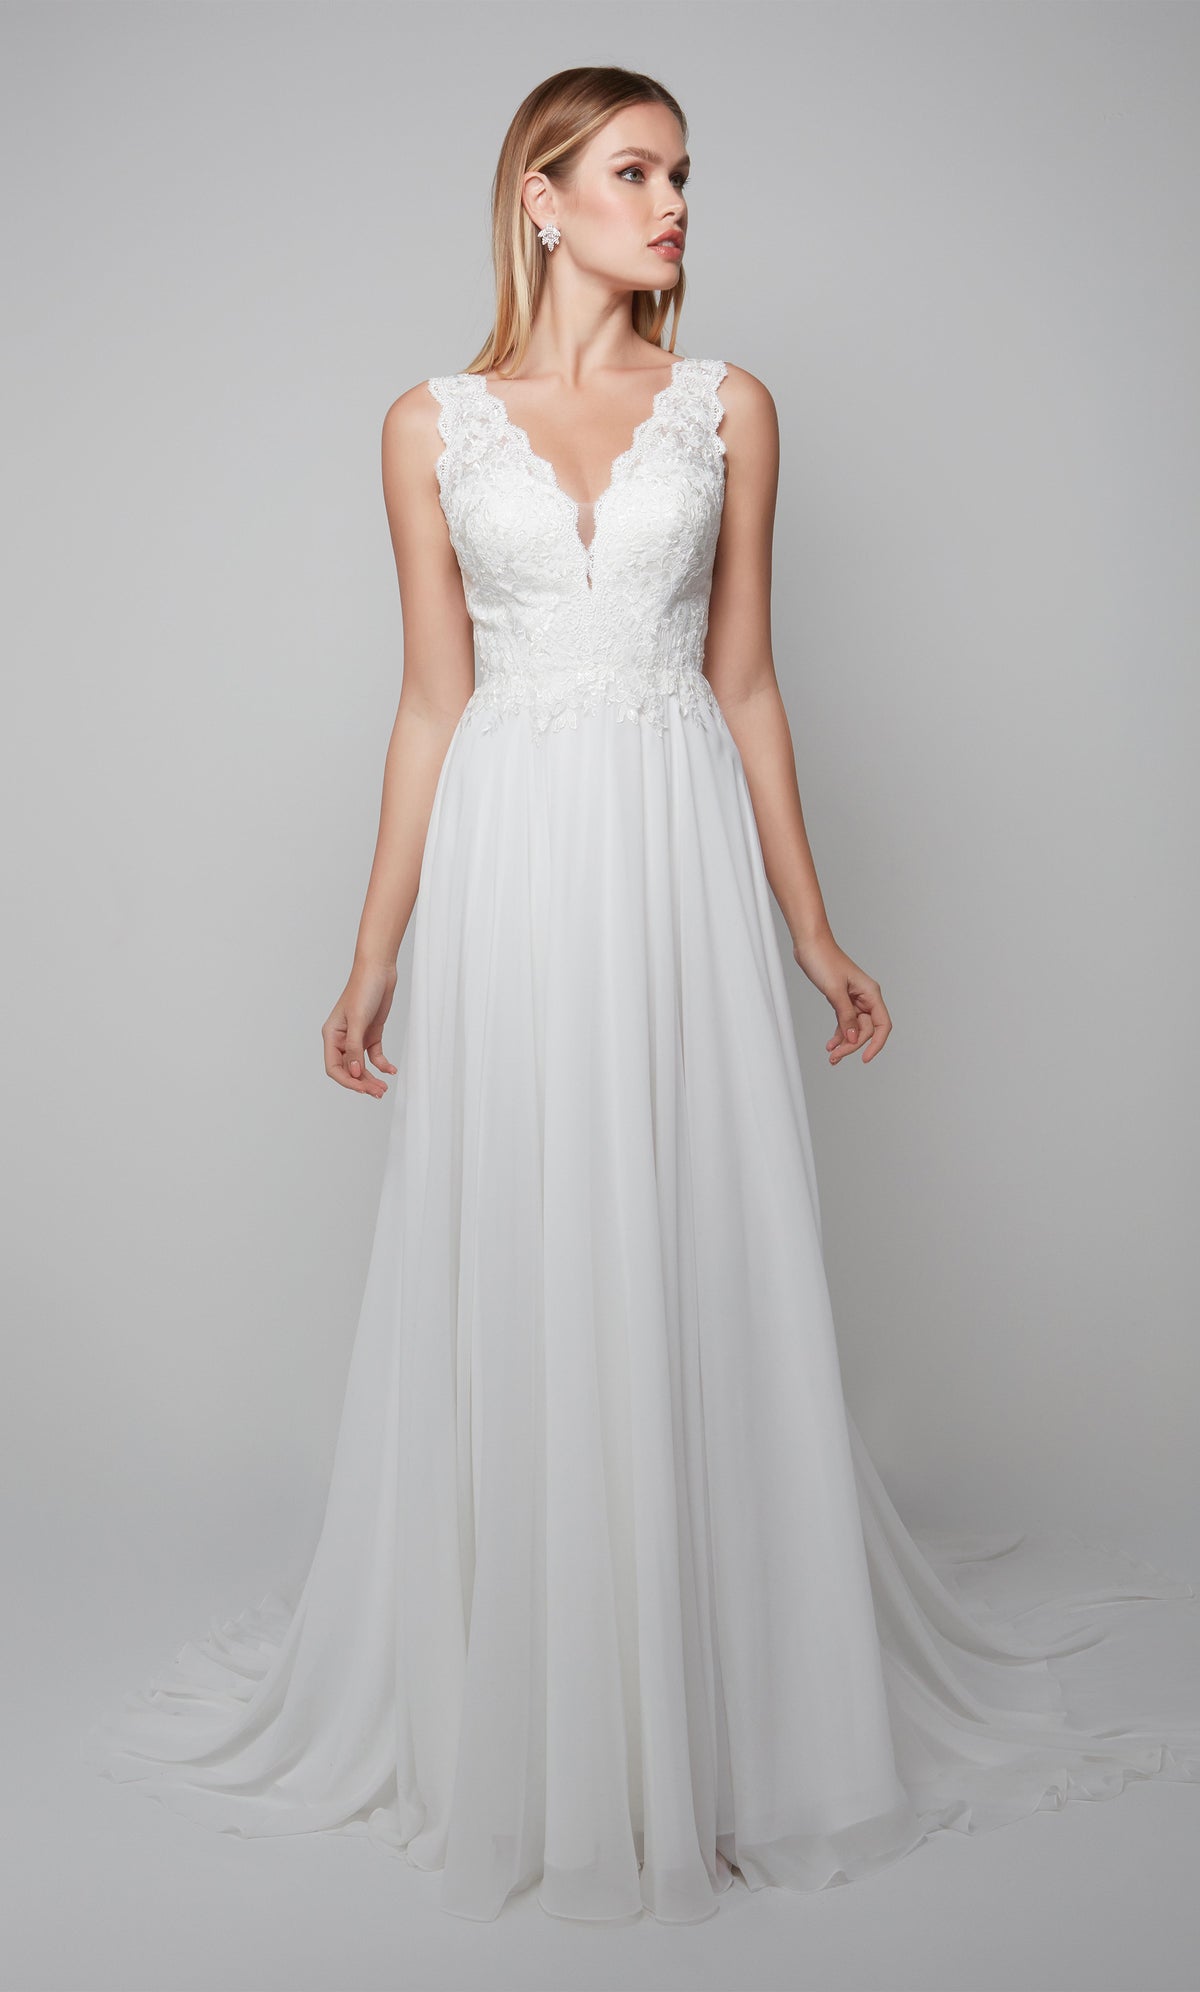 Sleeveless chiffon wedding dress with an elegant lace bodice in ivory.